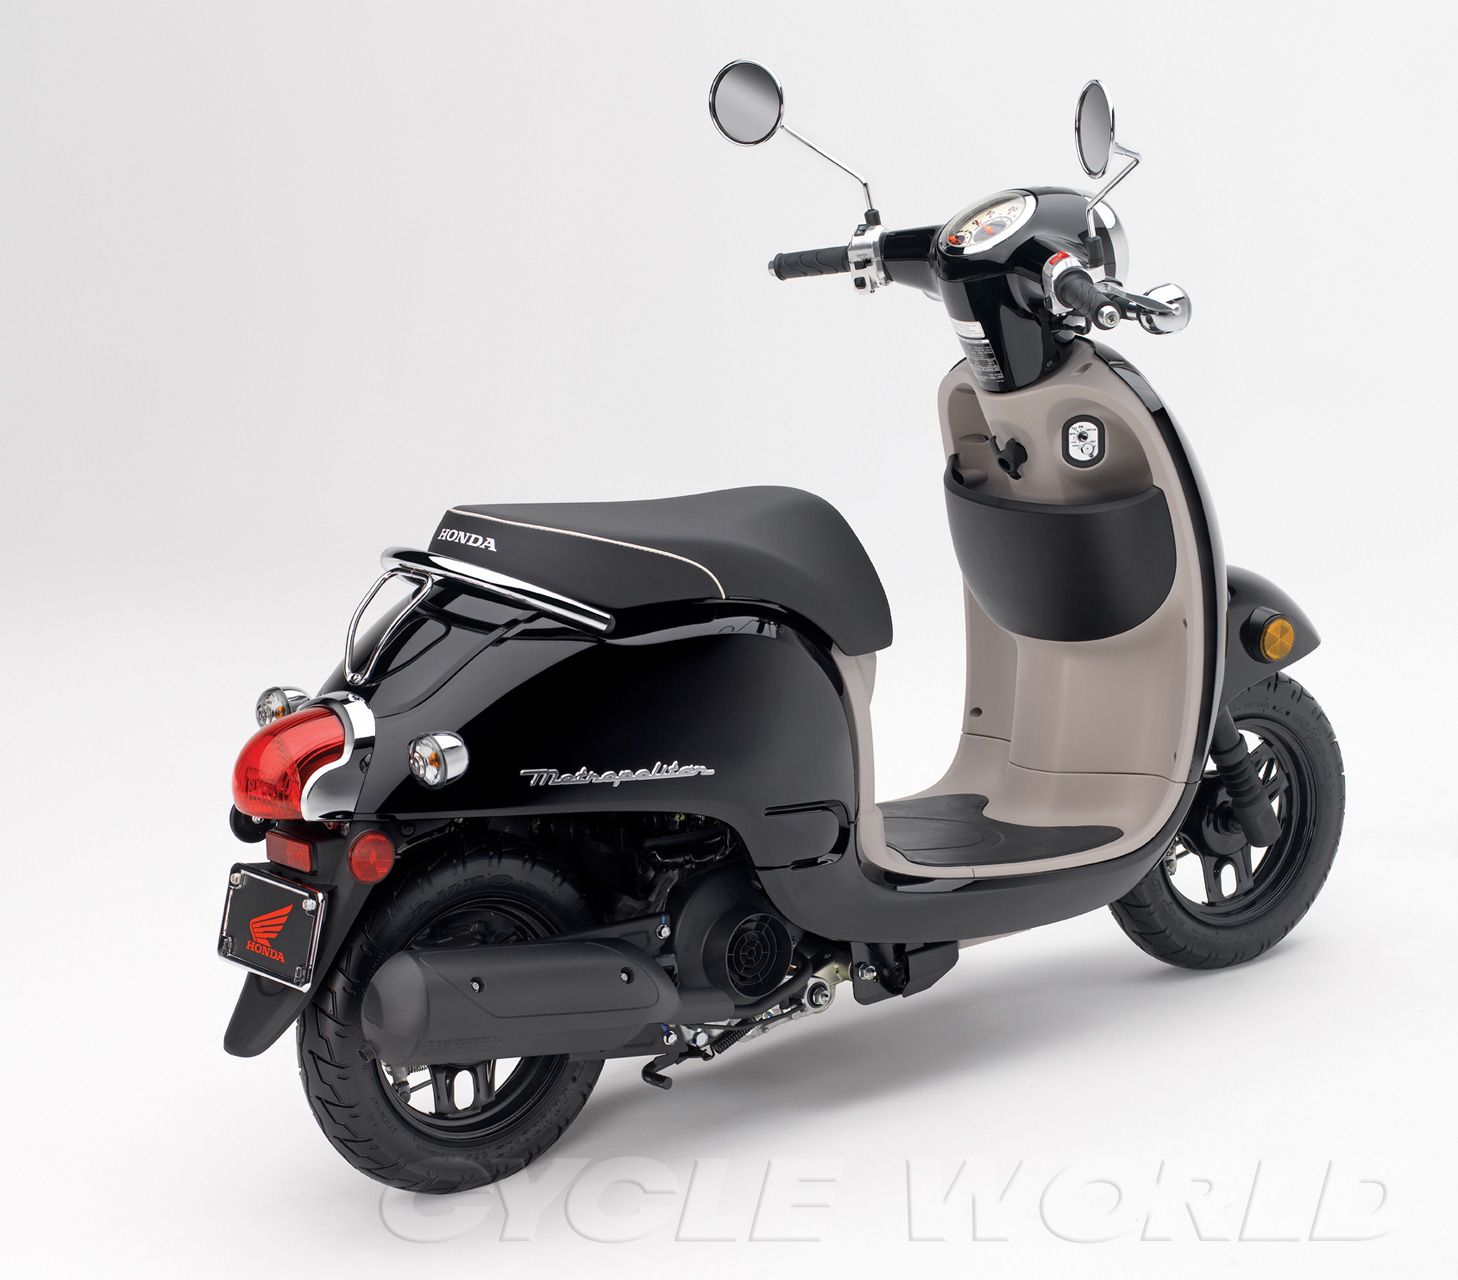 2013 Honda Metropolitan Ride Review- Scooter Reviews | World